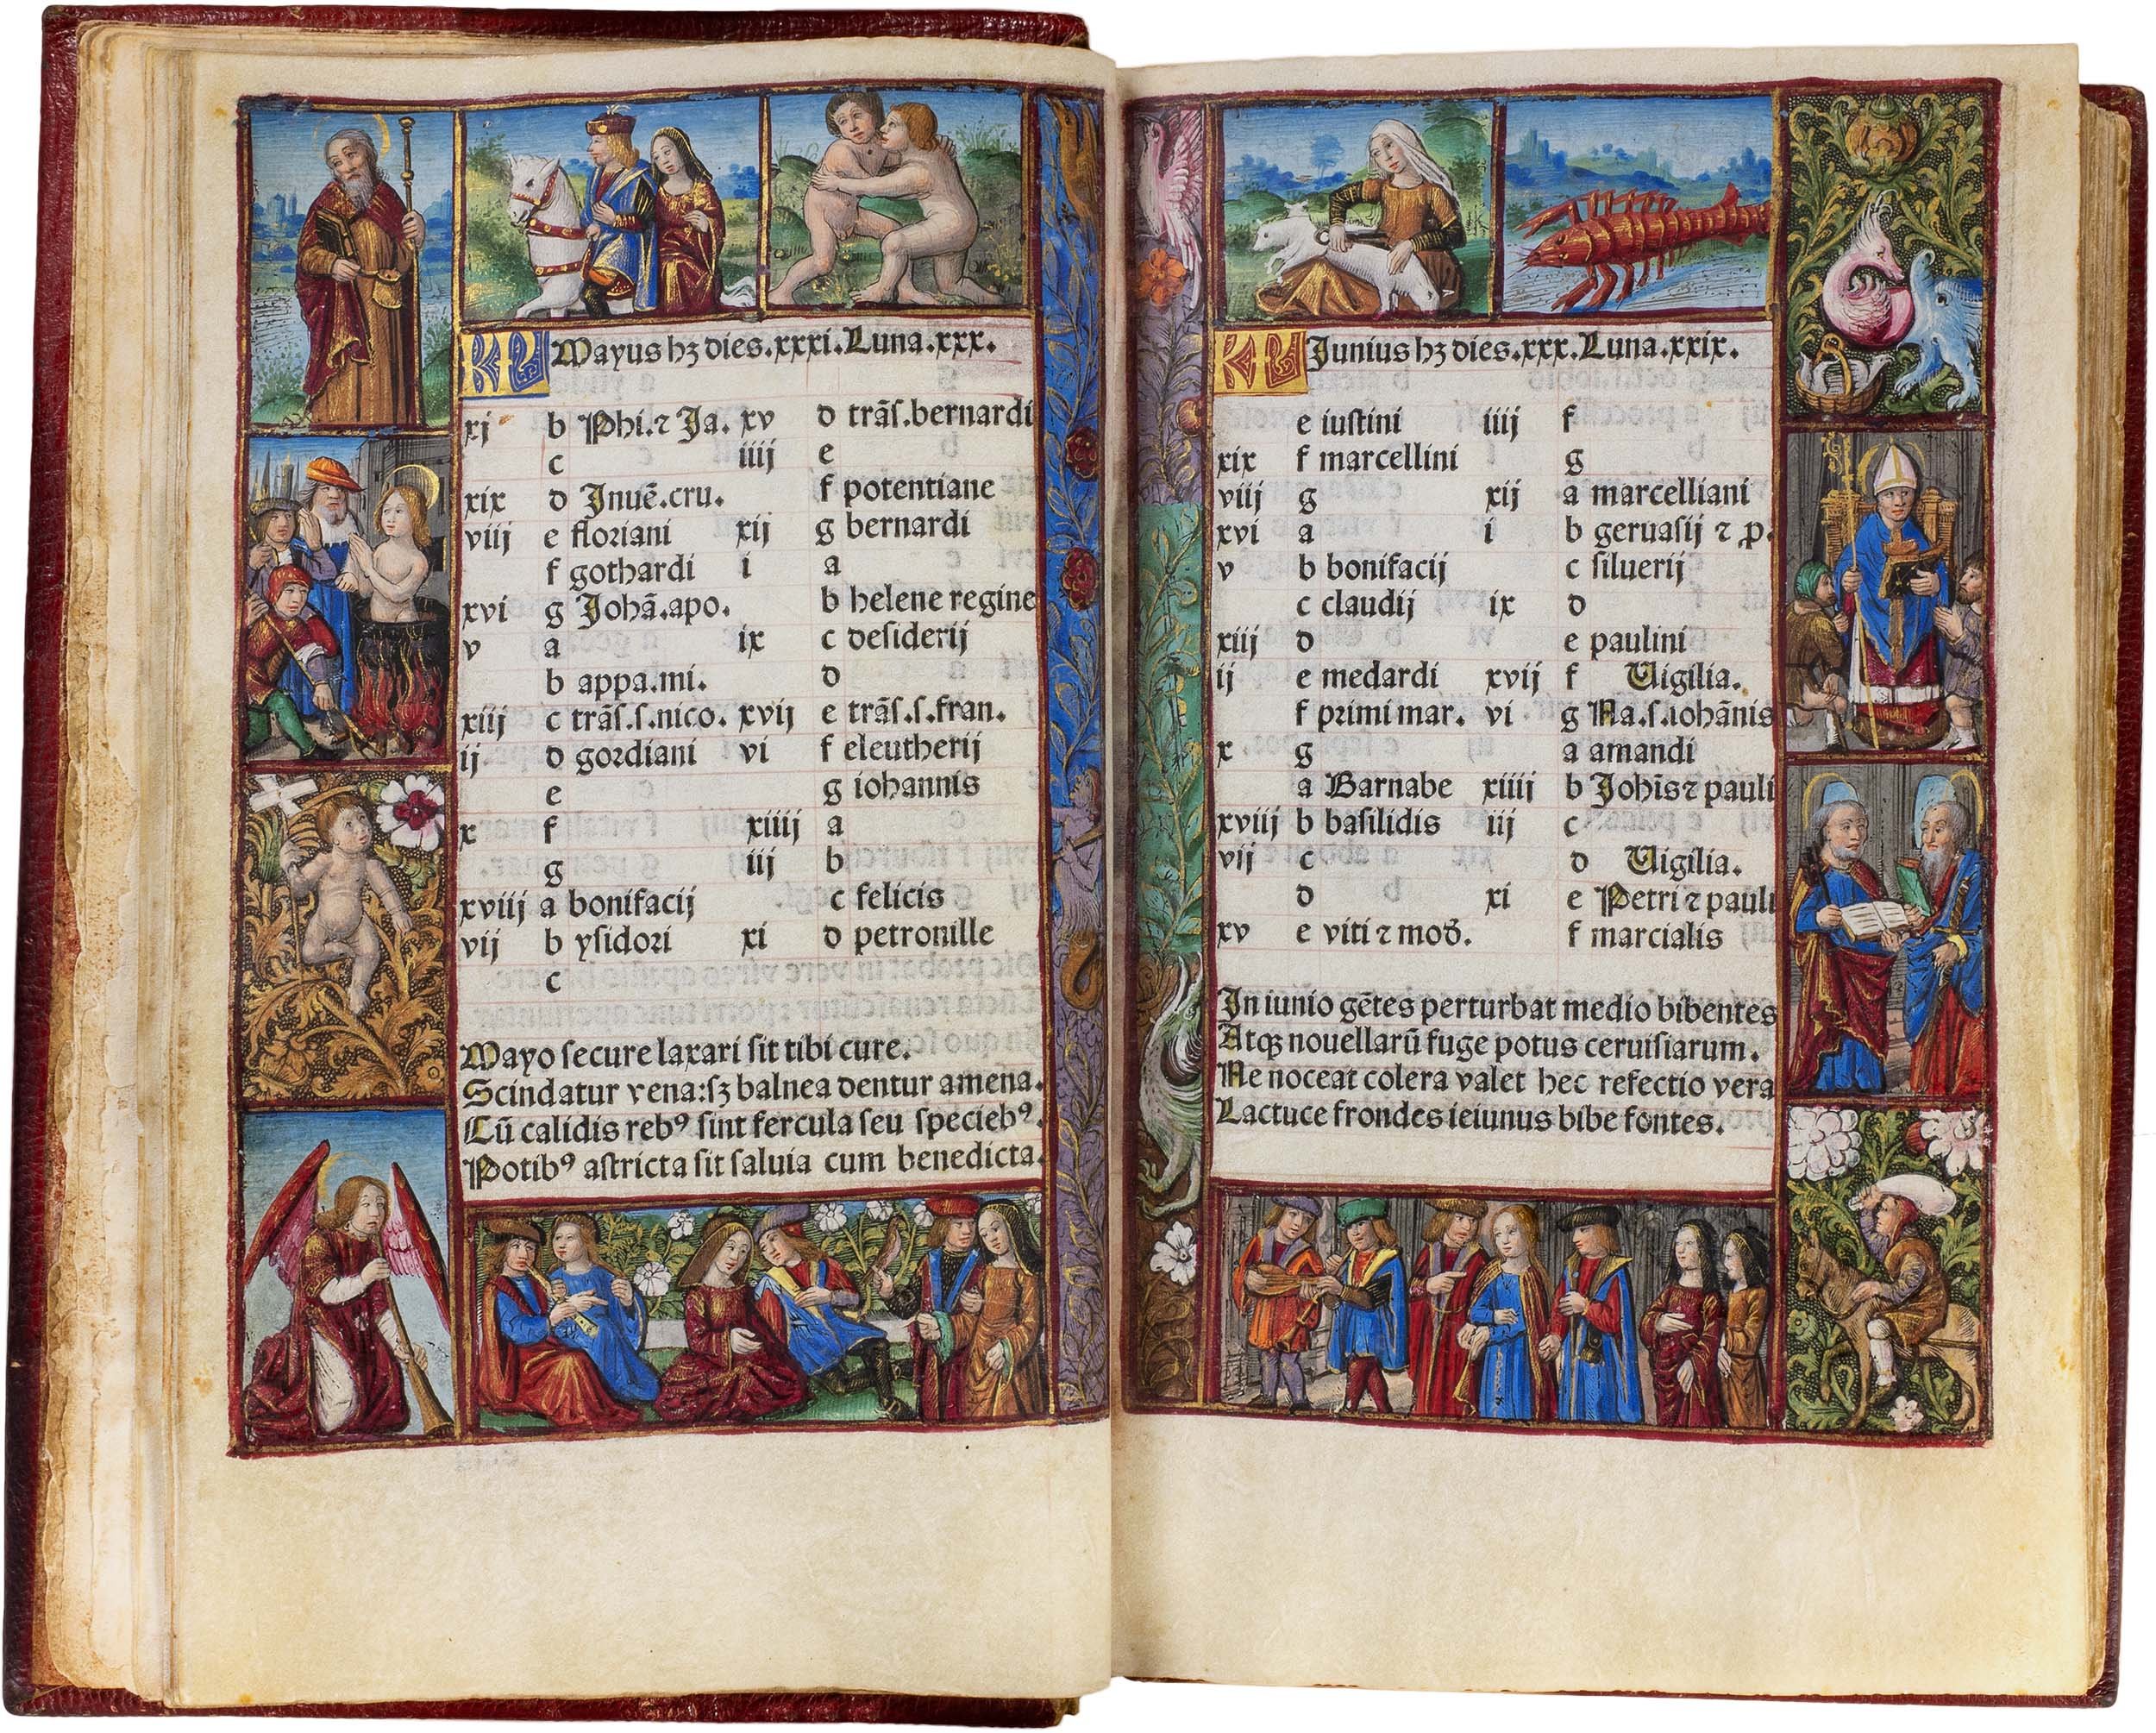 Horae-bmv-book-of-hours-Louis-XII-martainville-master-philippa-guelders-paris-pigouchet-vostre-15.10.1499-9.jpg